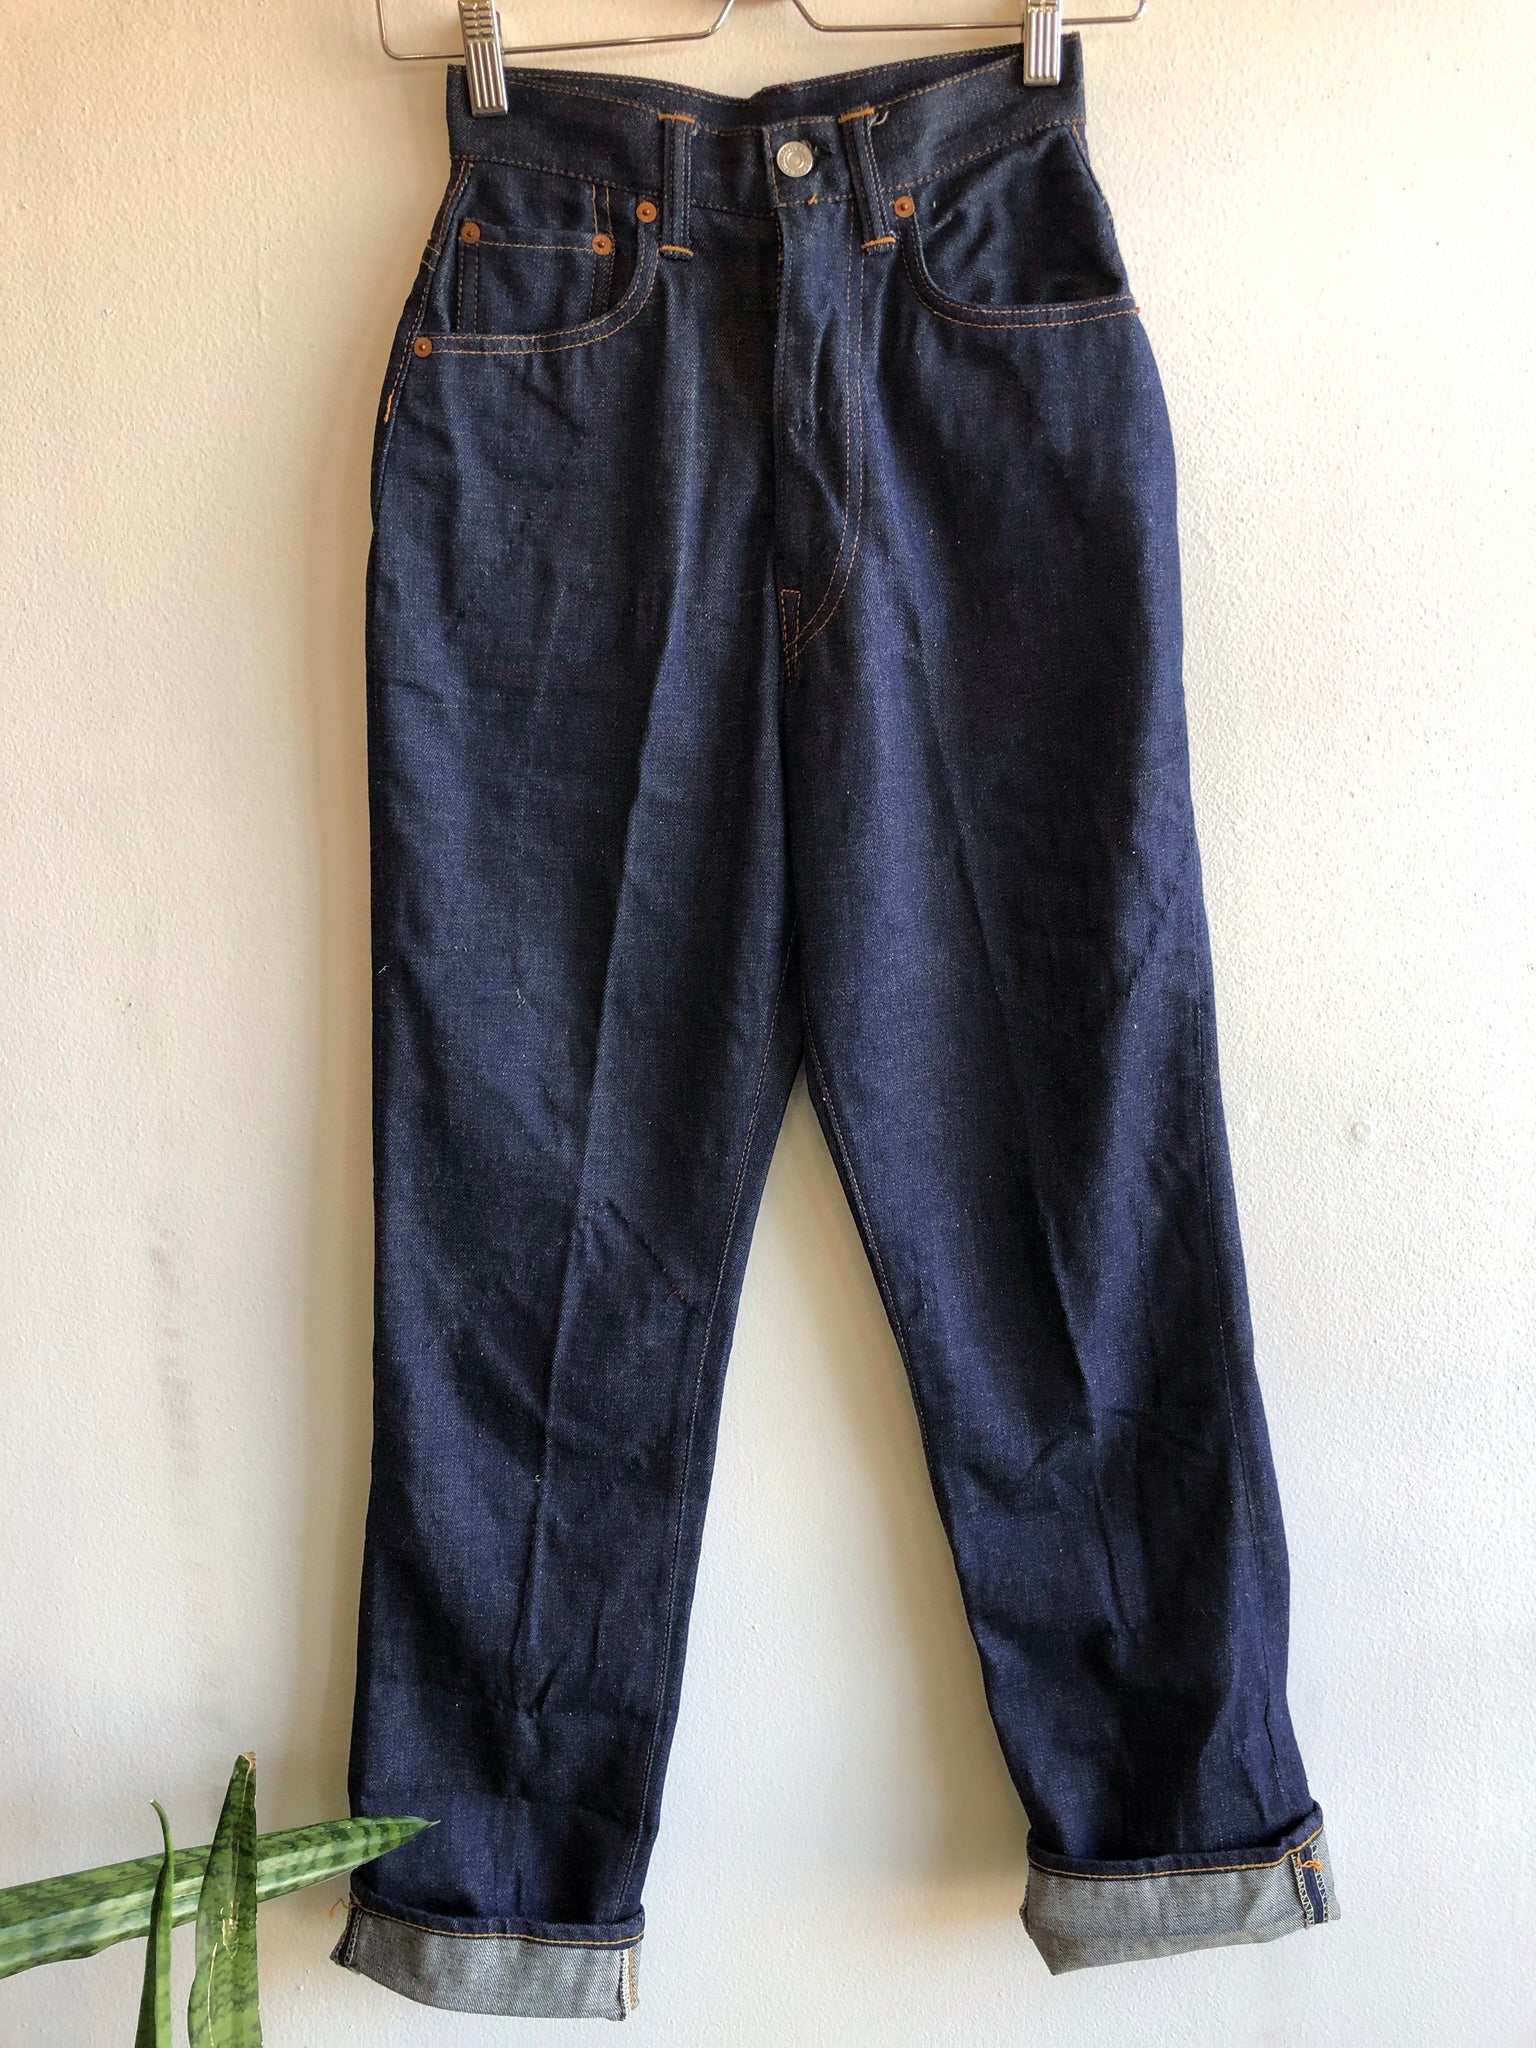 Vintage 1950s Levi's “Big E” Hidden Rivet 701 Deadstock Denim Jeans